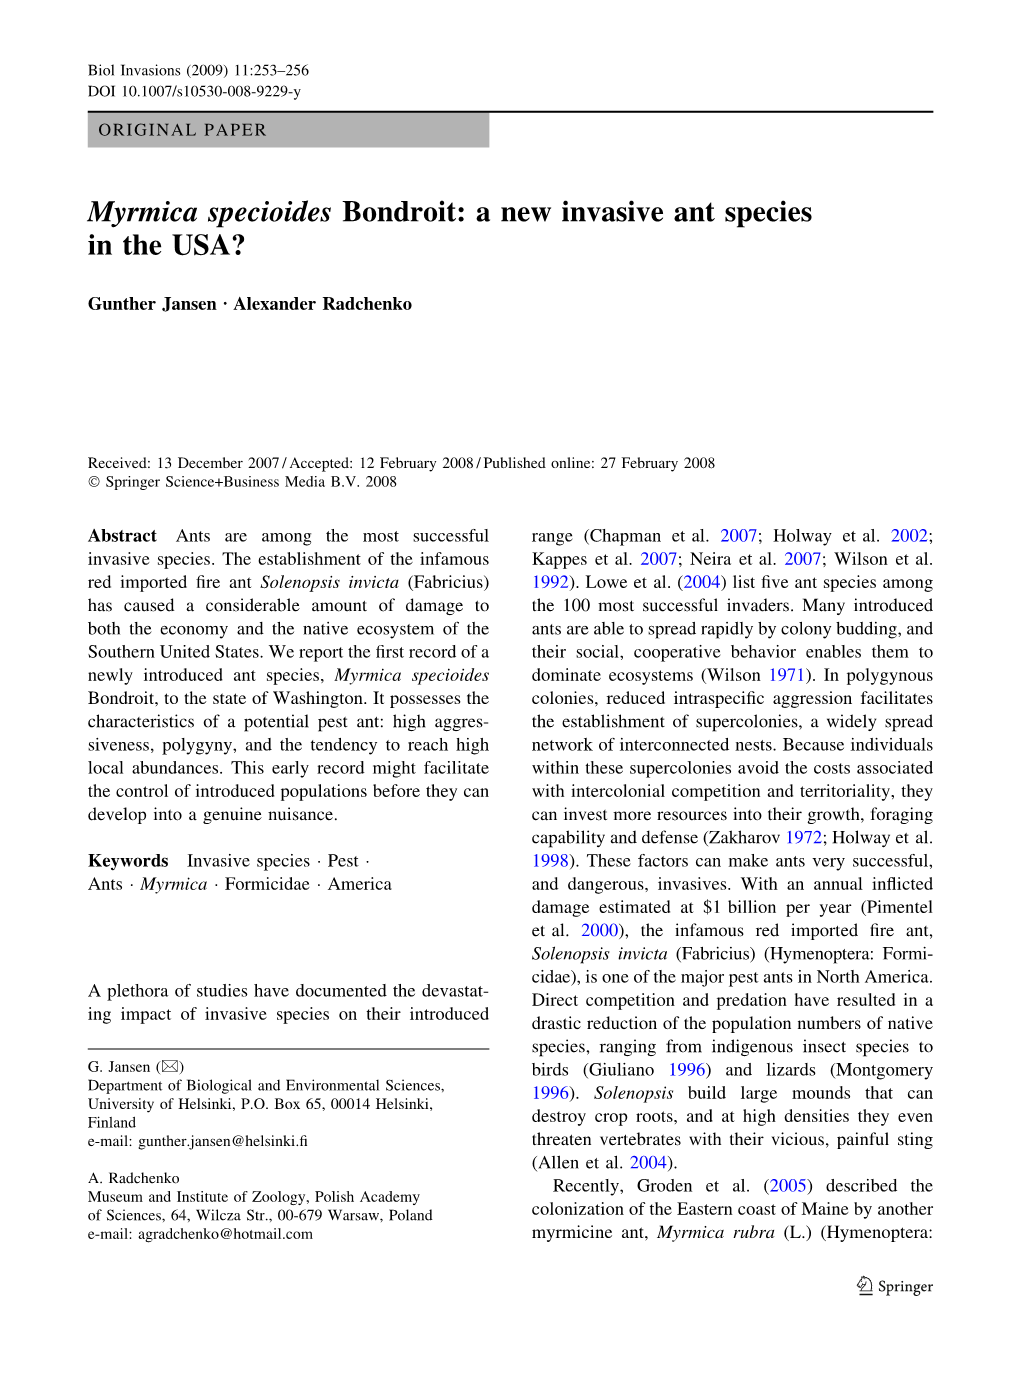 Myrmica Specioides Bondroit: a New Invasive Ant Species in the USA?